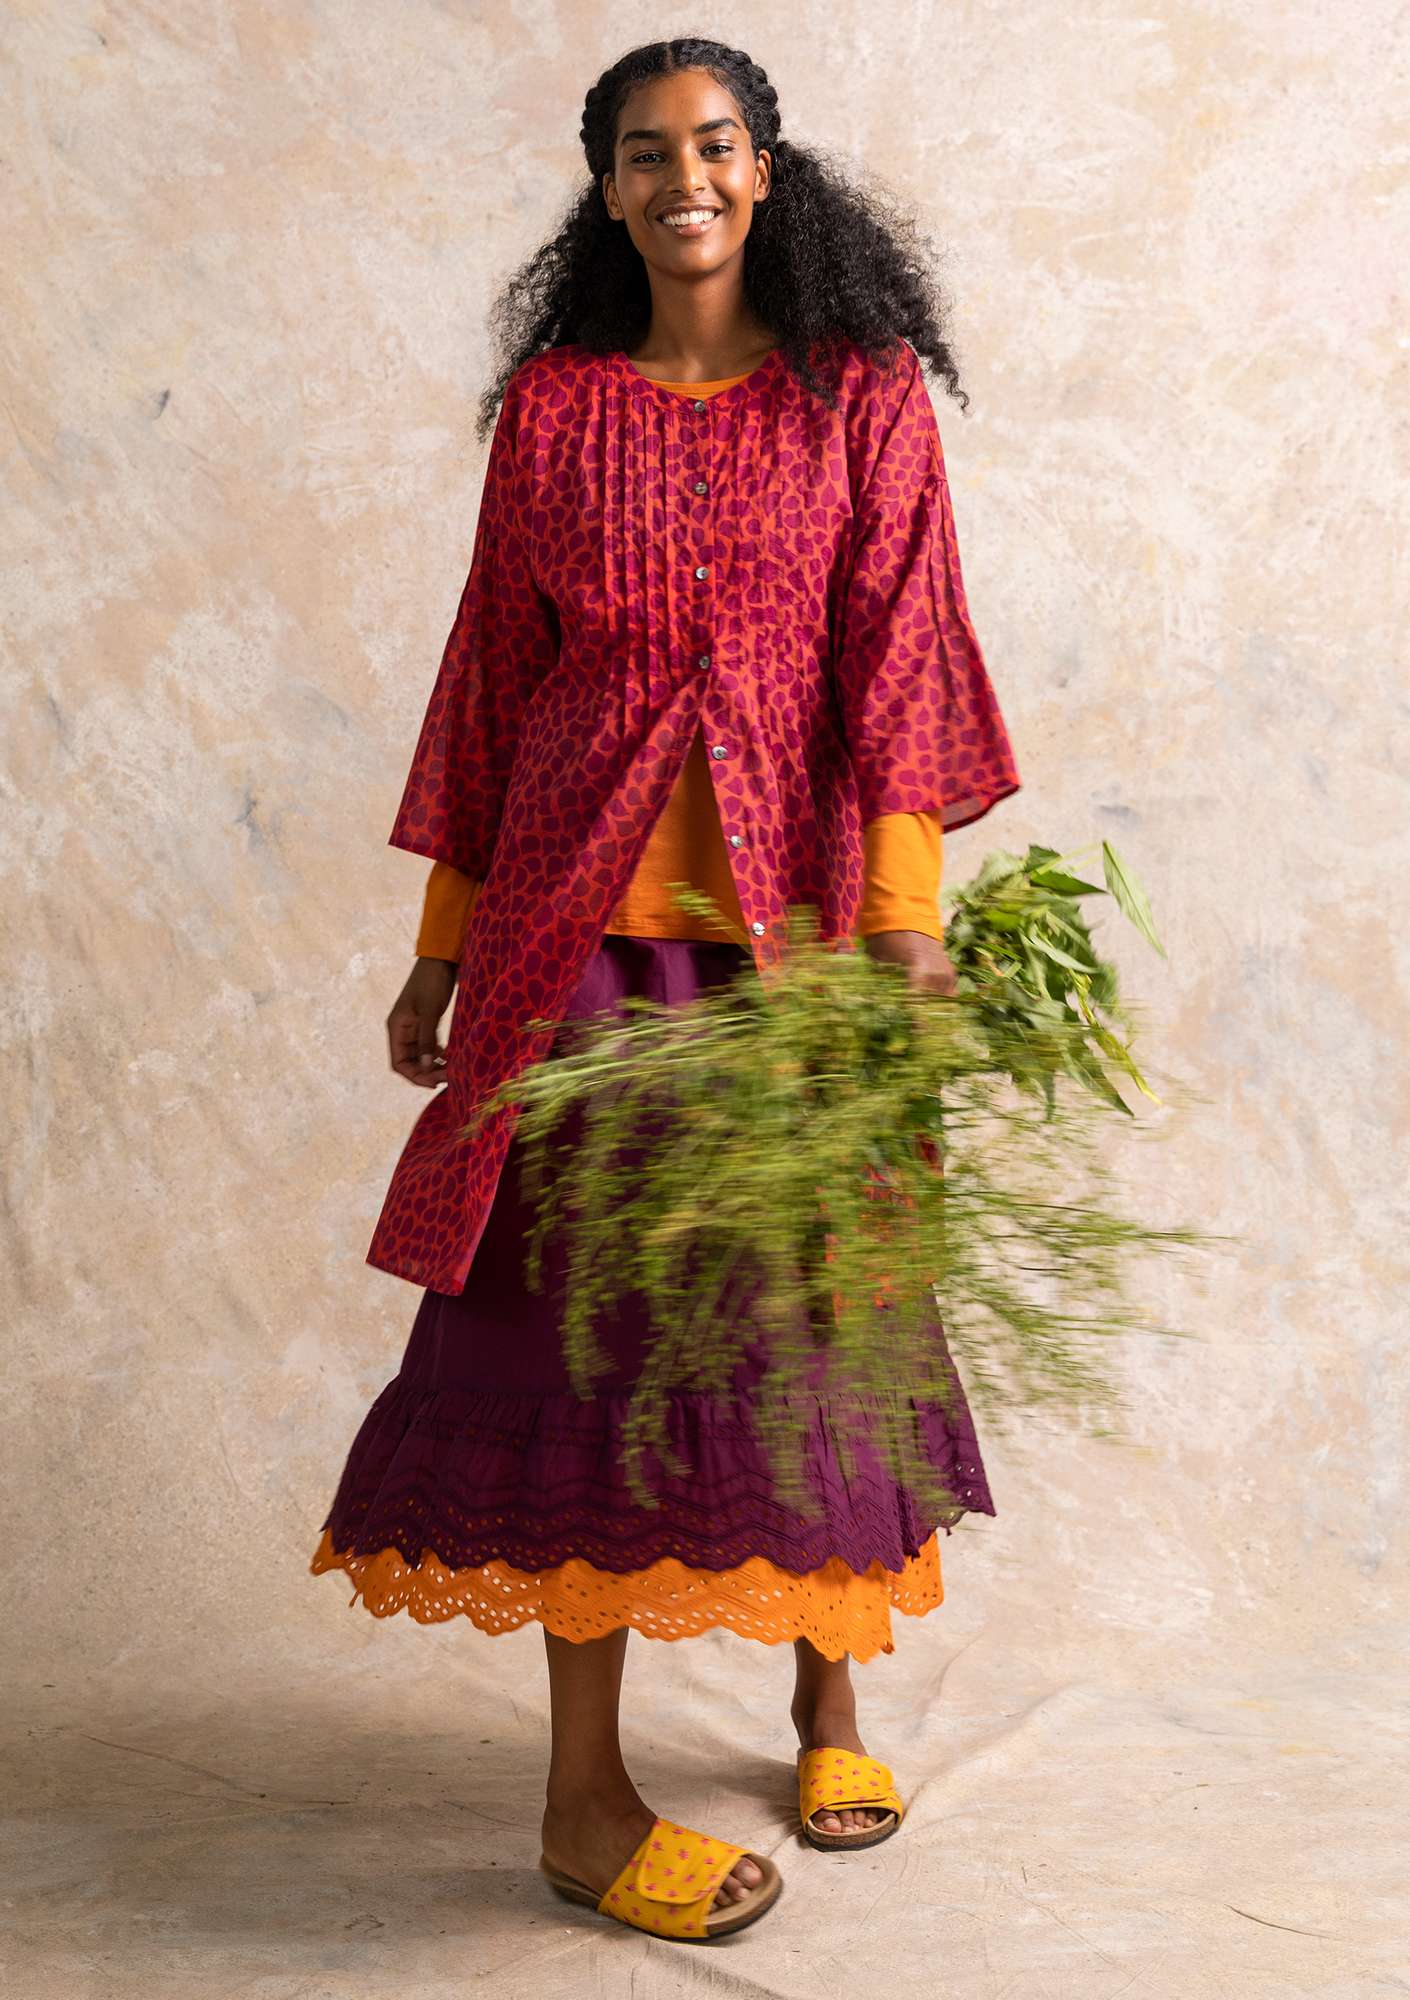 “Serafina” woven organic cotton dress parrot red/patterned thumbnail